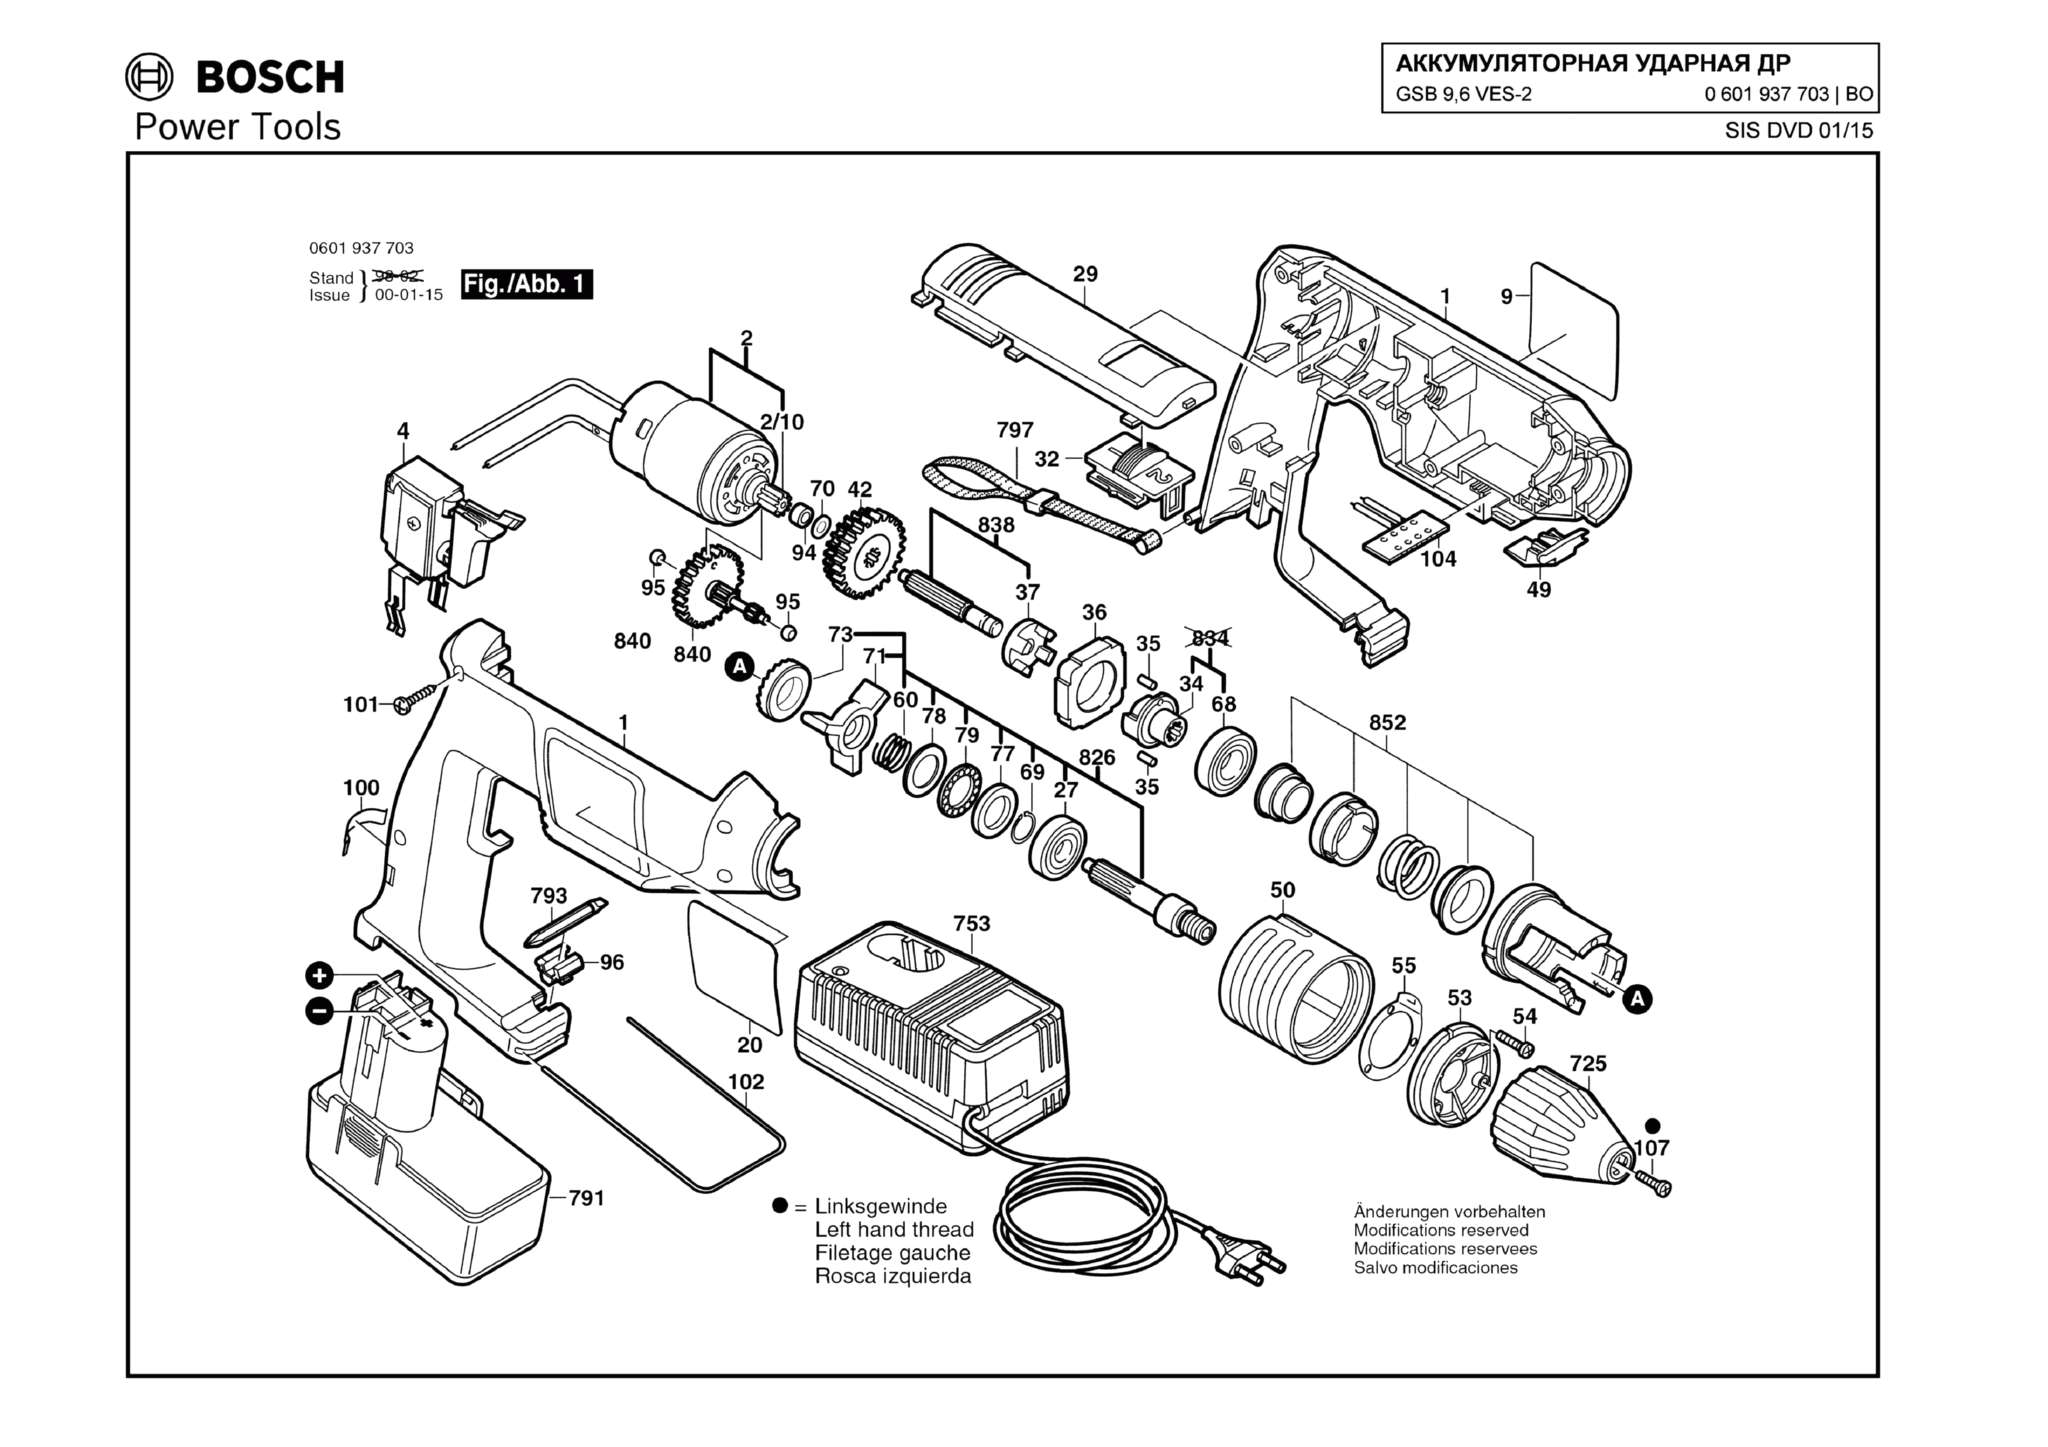 Запчасти, схема и деталировка Bosch GSB 9,6 VES-2 (ТИП 0601937703)